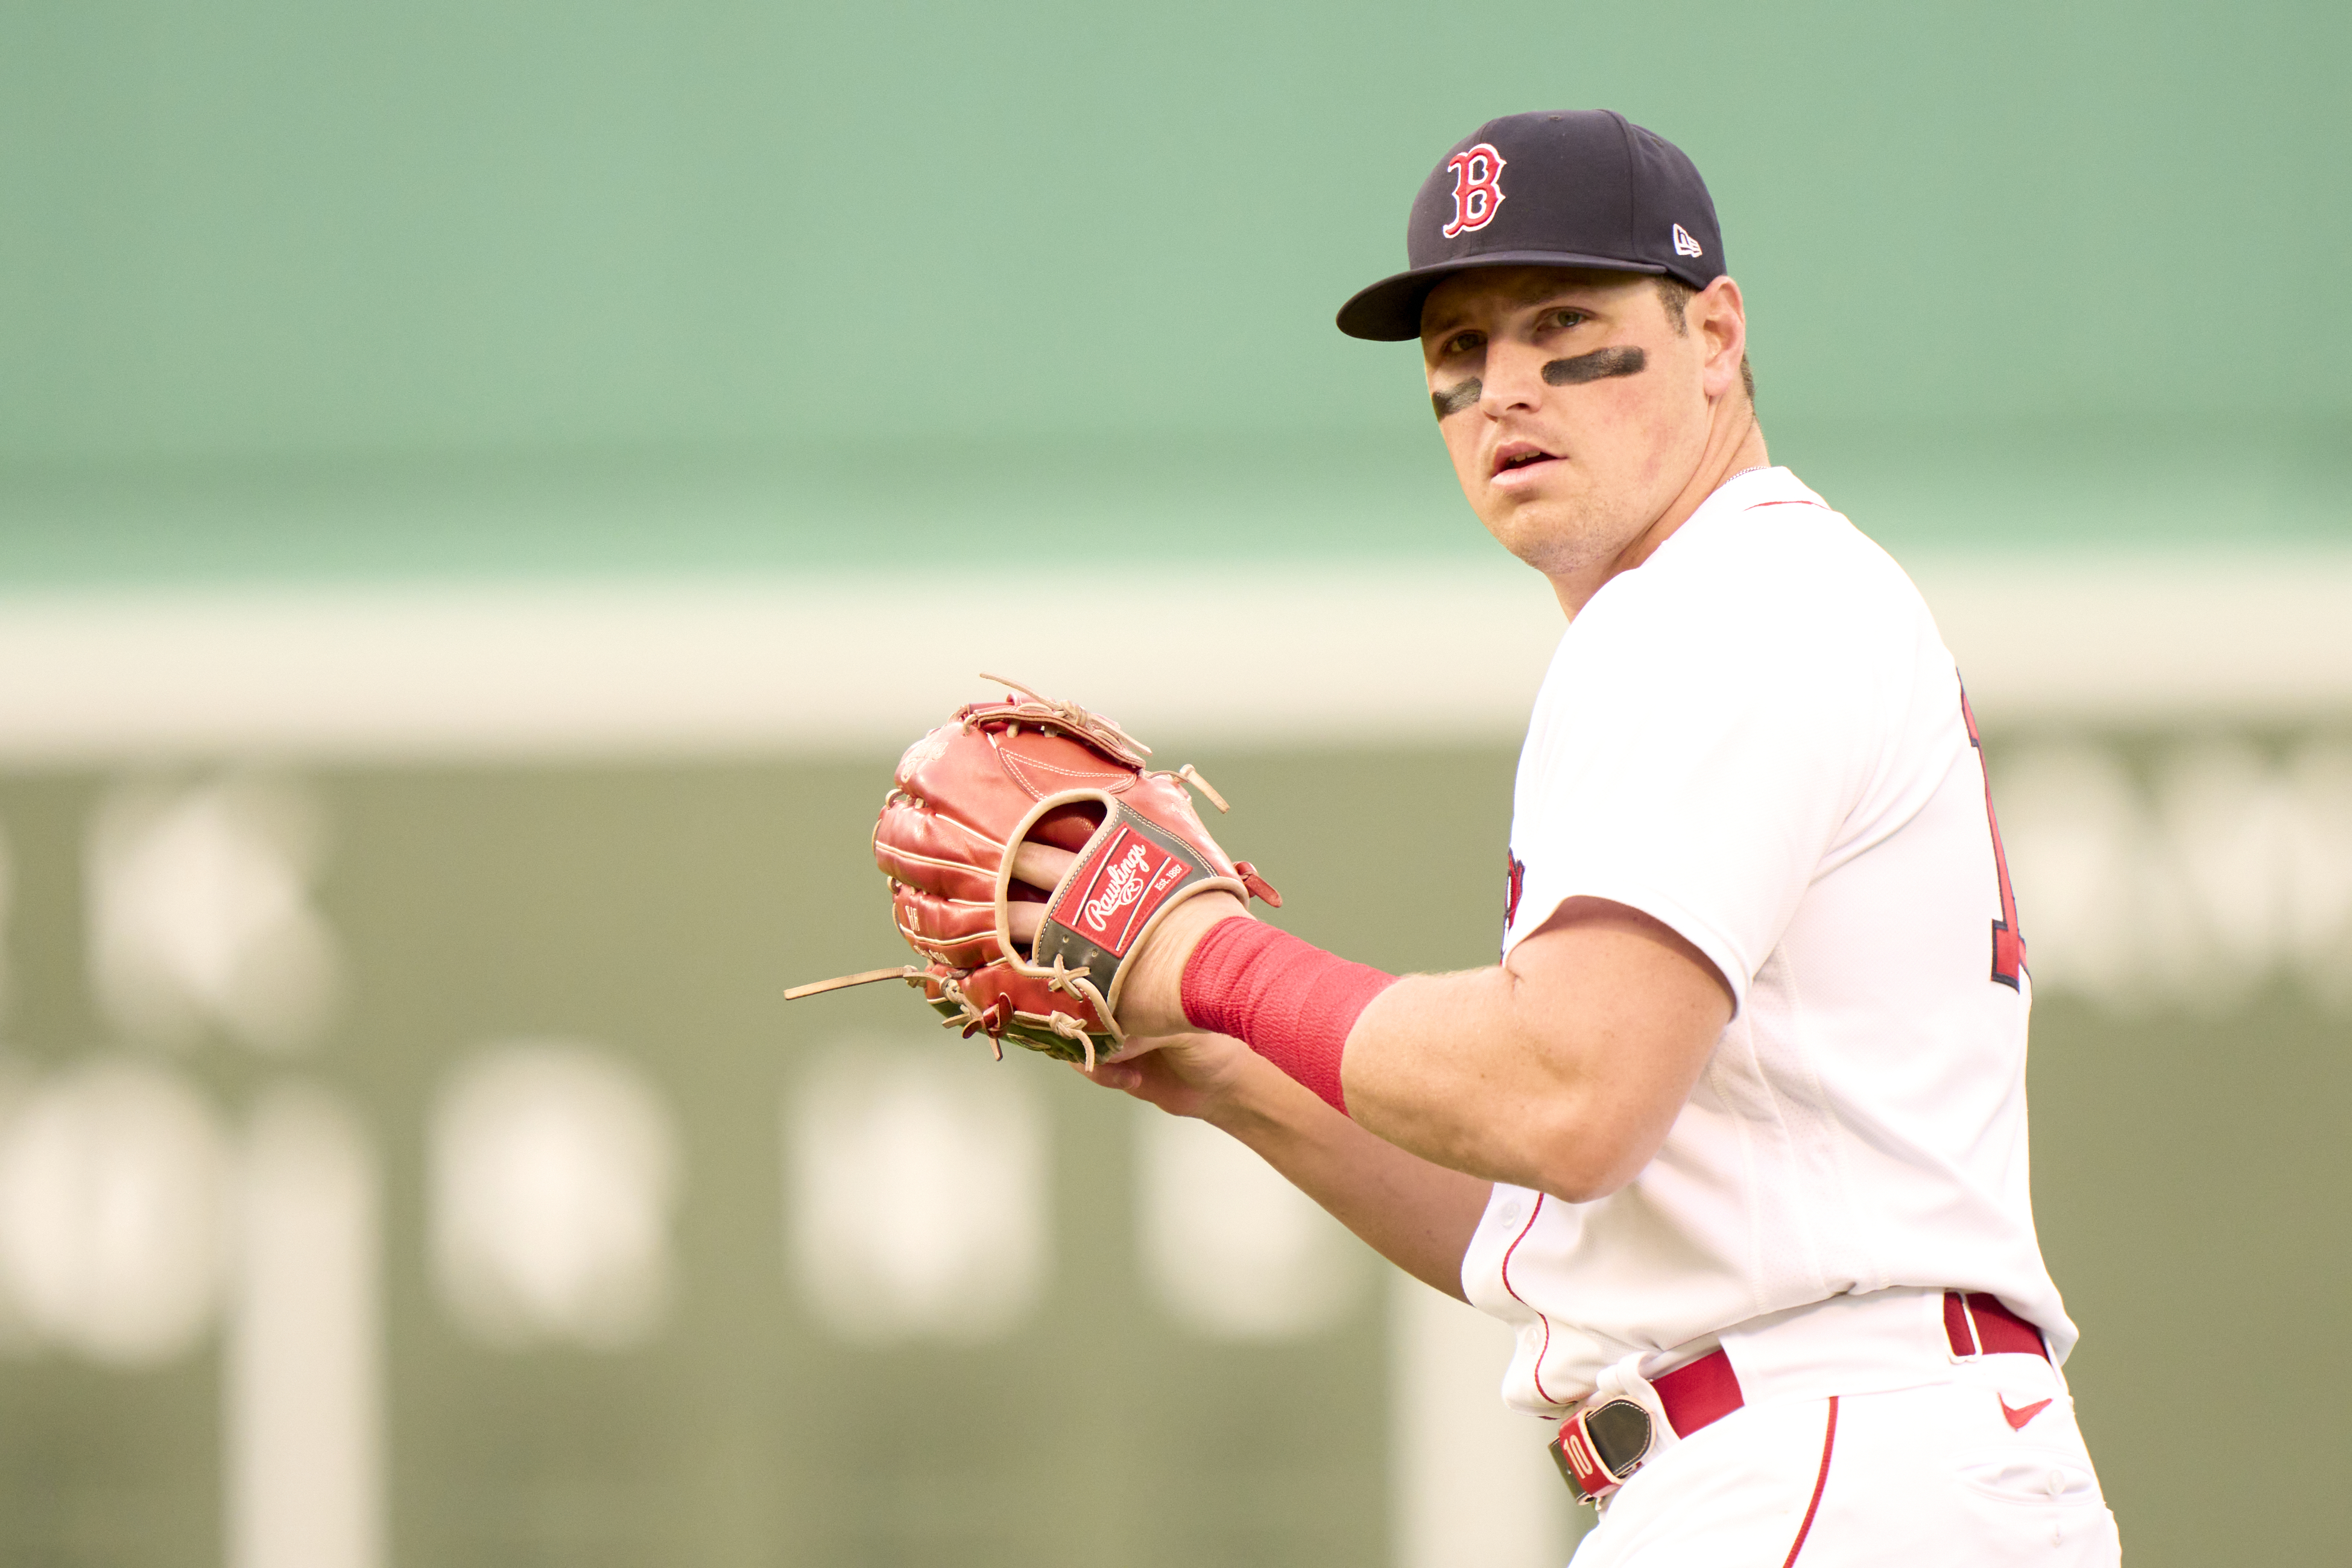 Boston Red Sox vs Houston Astros, 2021 American League Championship Series